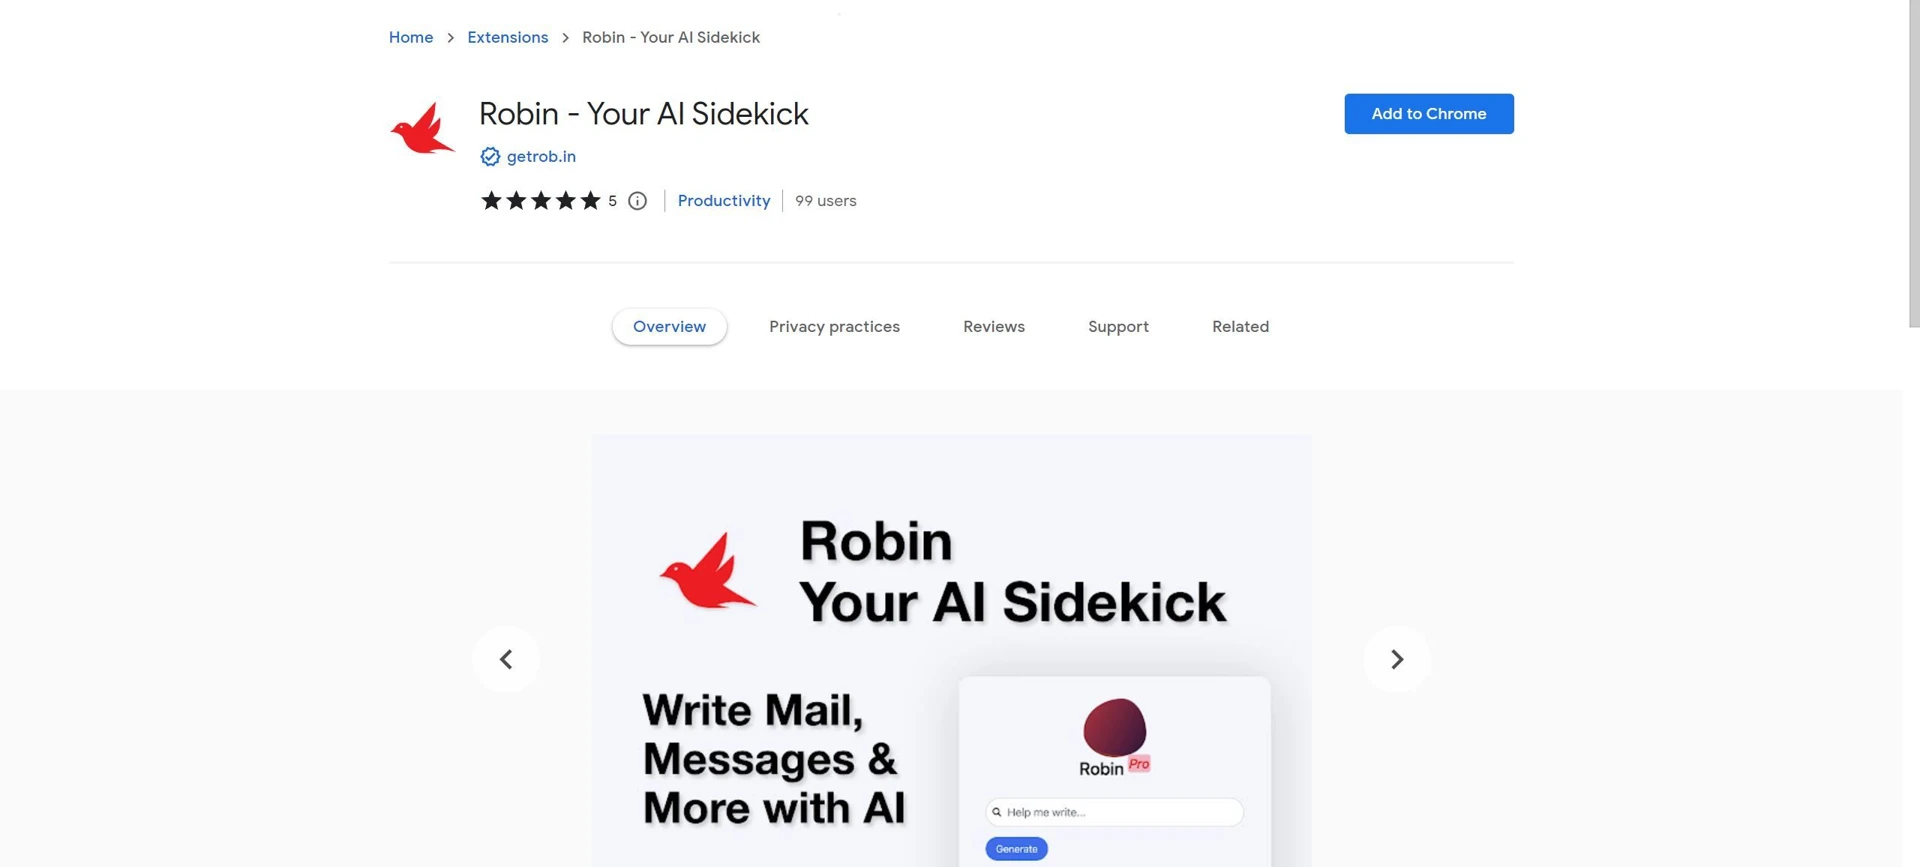 Robin - Your AI Sidekickwebsite picture